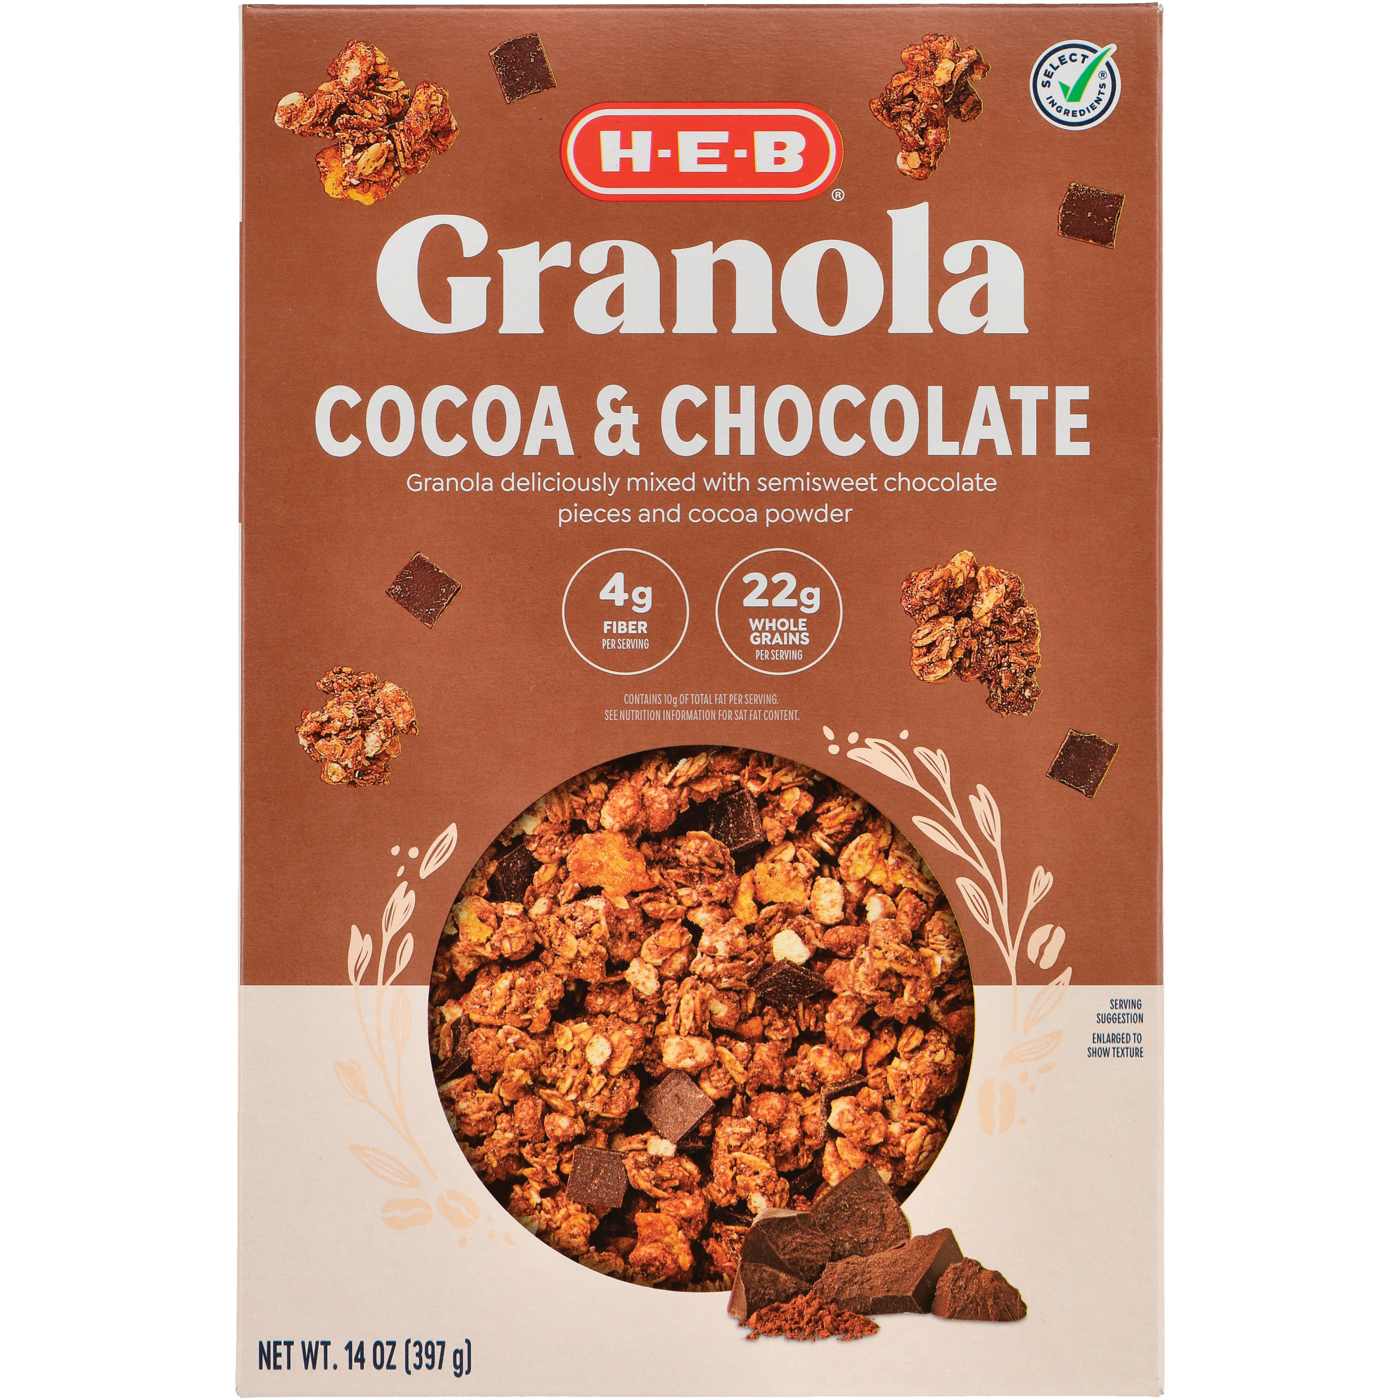 H-E-B Cocoa & Chocolate Granola; image 1 of 2